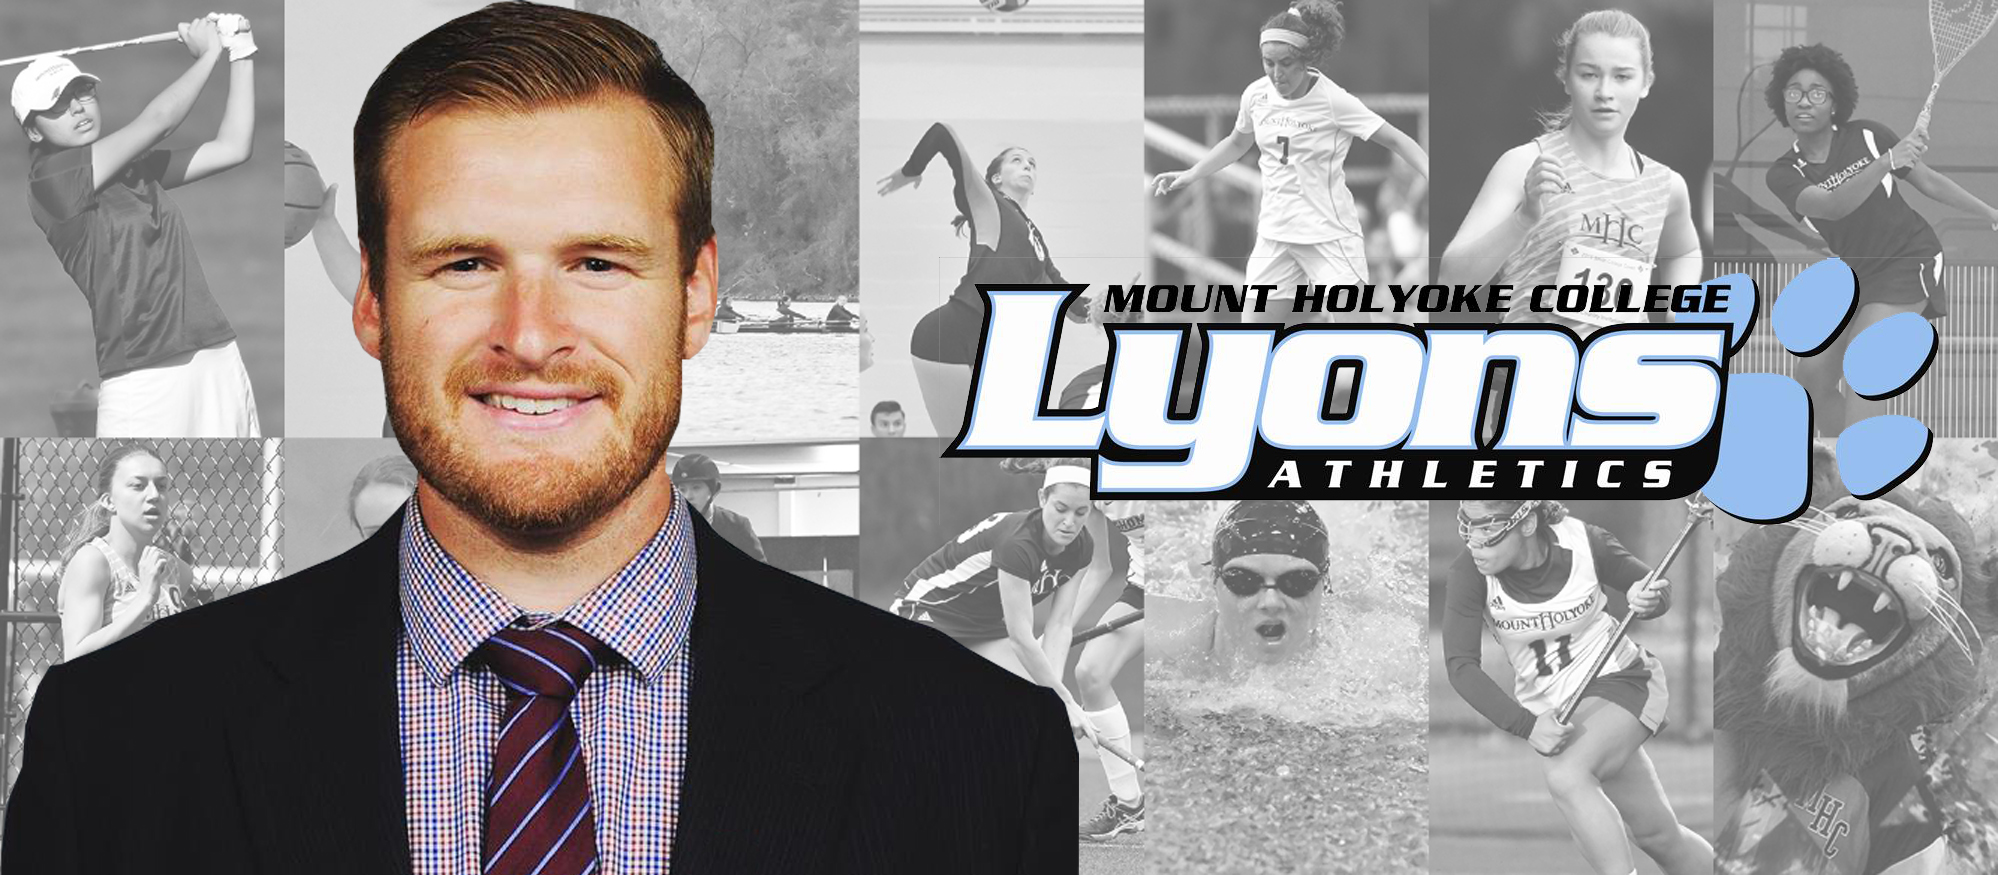 Jon Santer Named Associate Director of Athletics for Communications at Mount Holyoke College